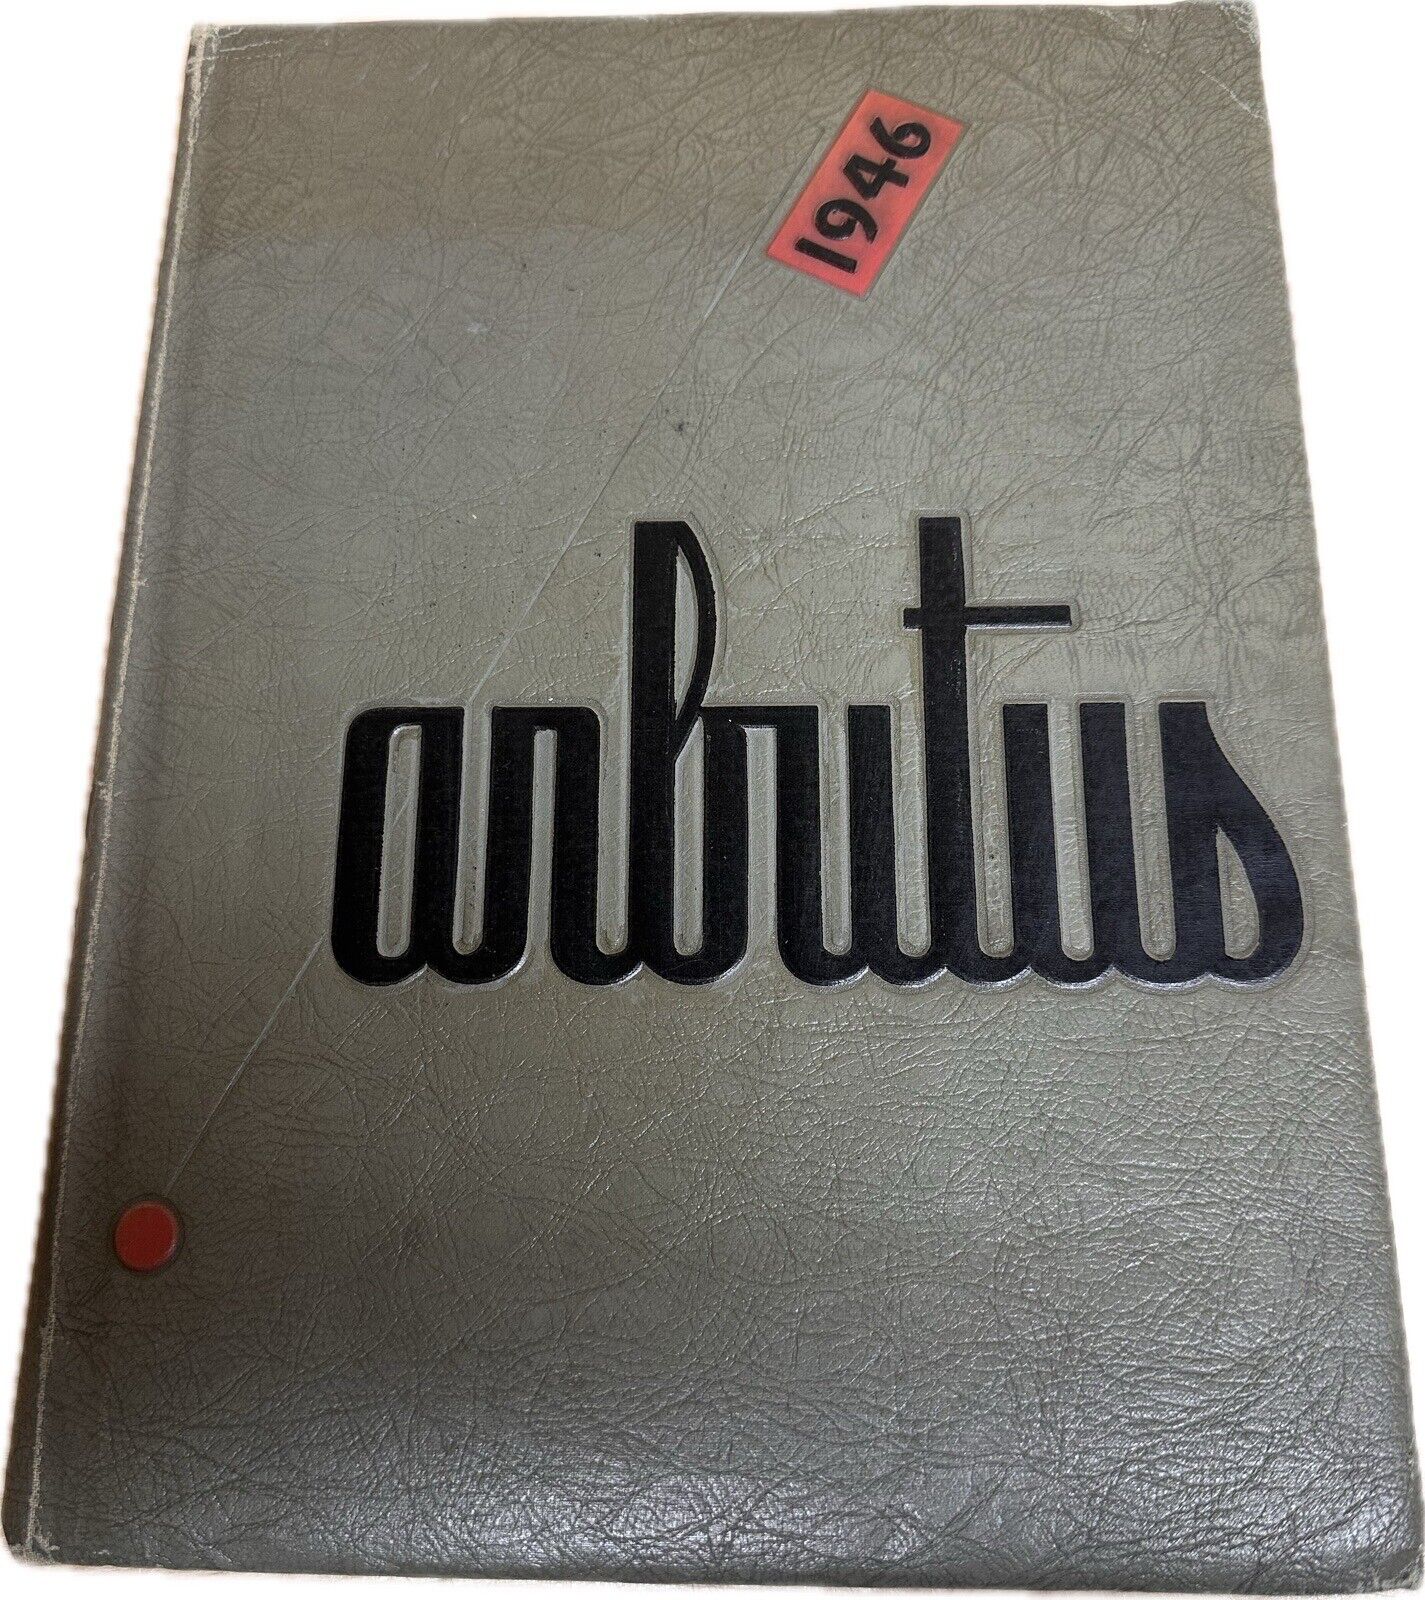 IU Arbutus. 1946 Indiana University Yearbook Vol. 53